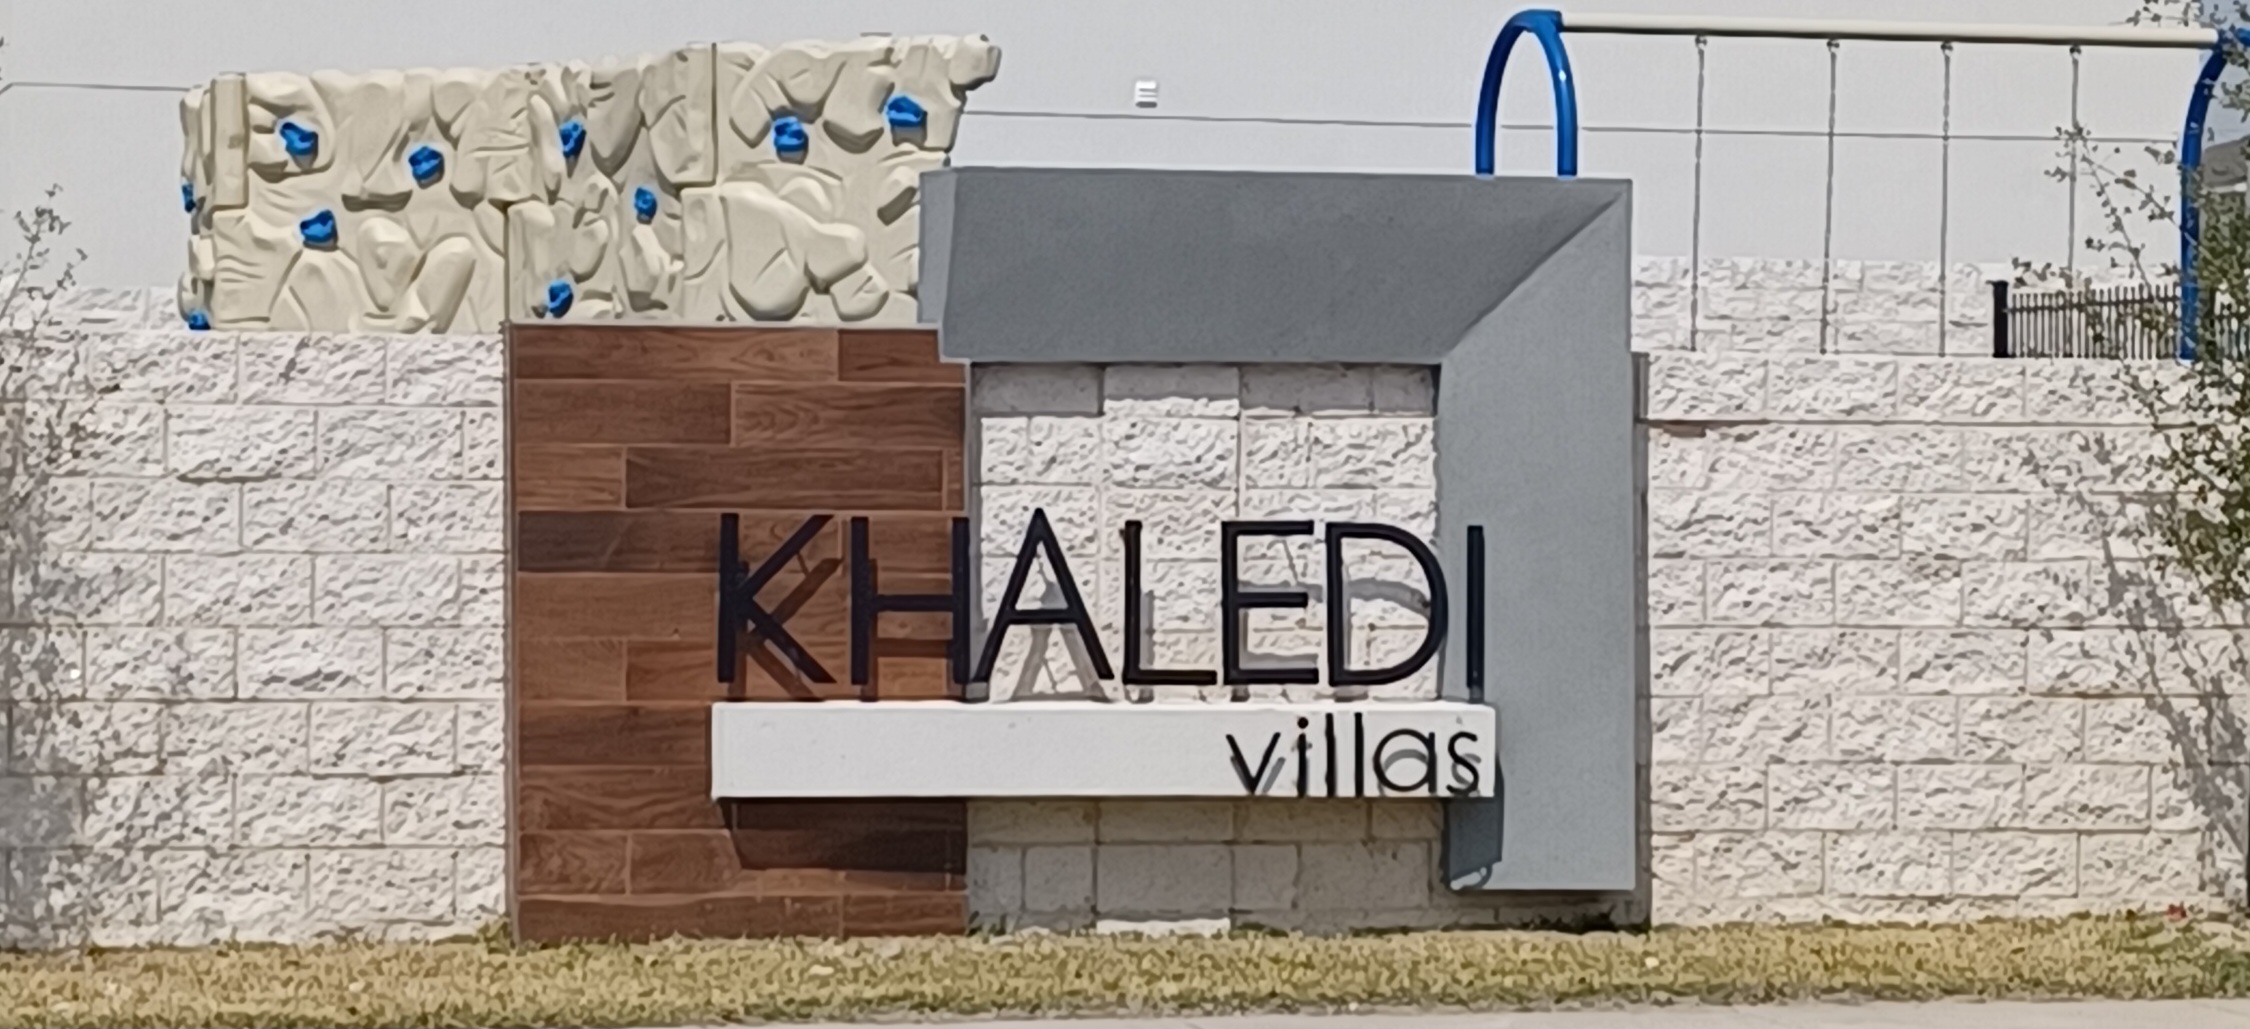 Khaledi Villas Homeowners Association